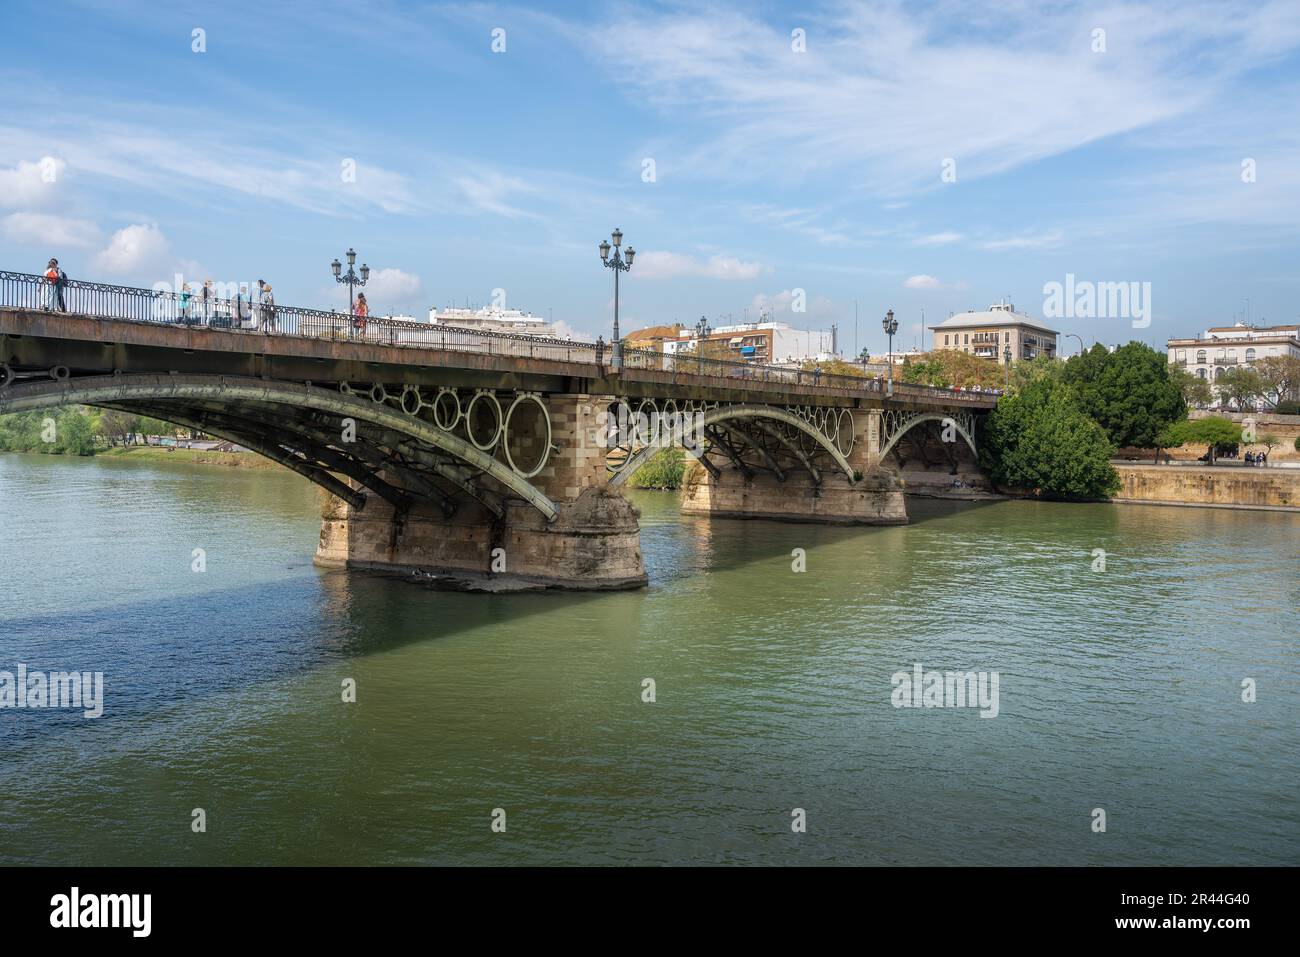 Triana-Brücke (Puente de Triana) am Fluss Guadalquivir - Sevilla, Andalusien, Spanien Stockfoto